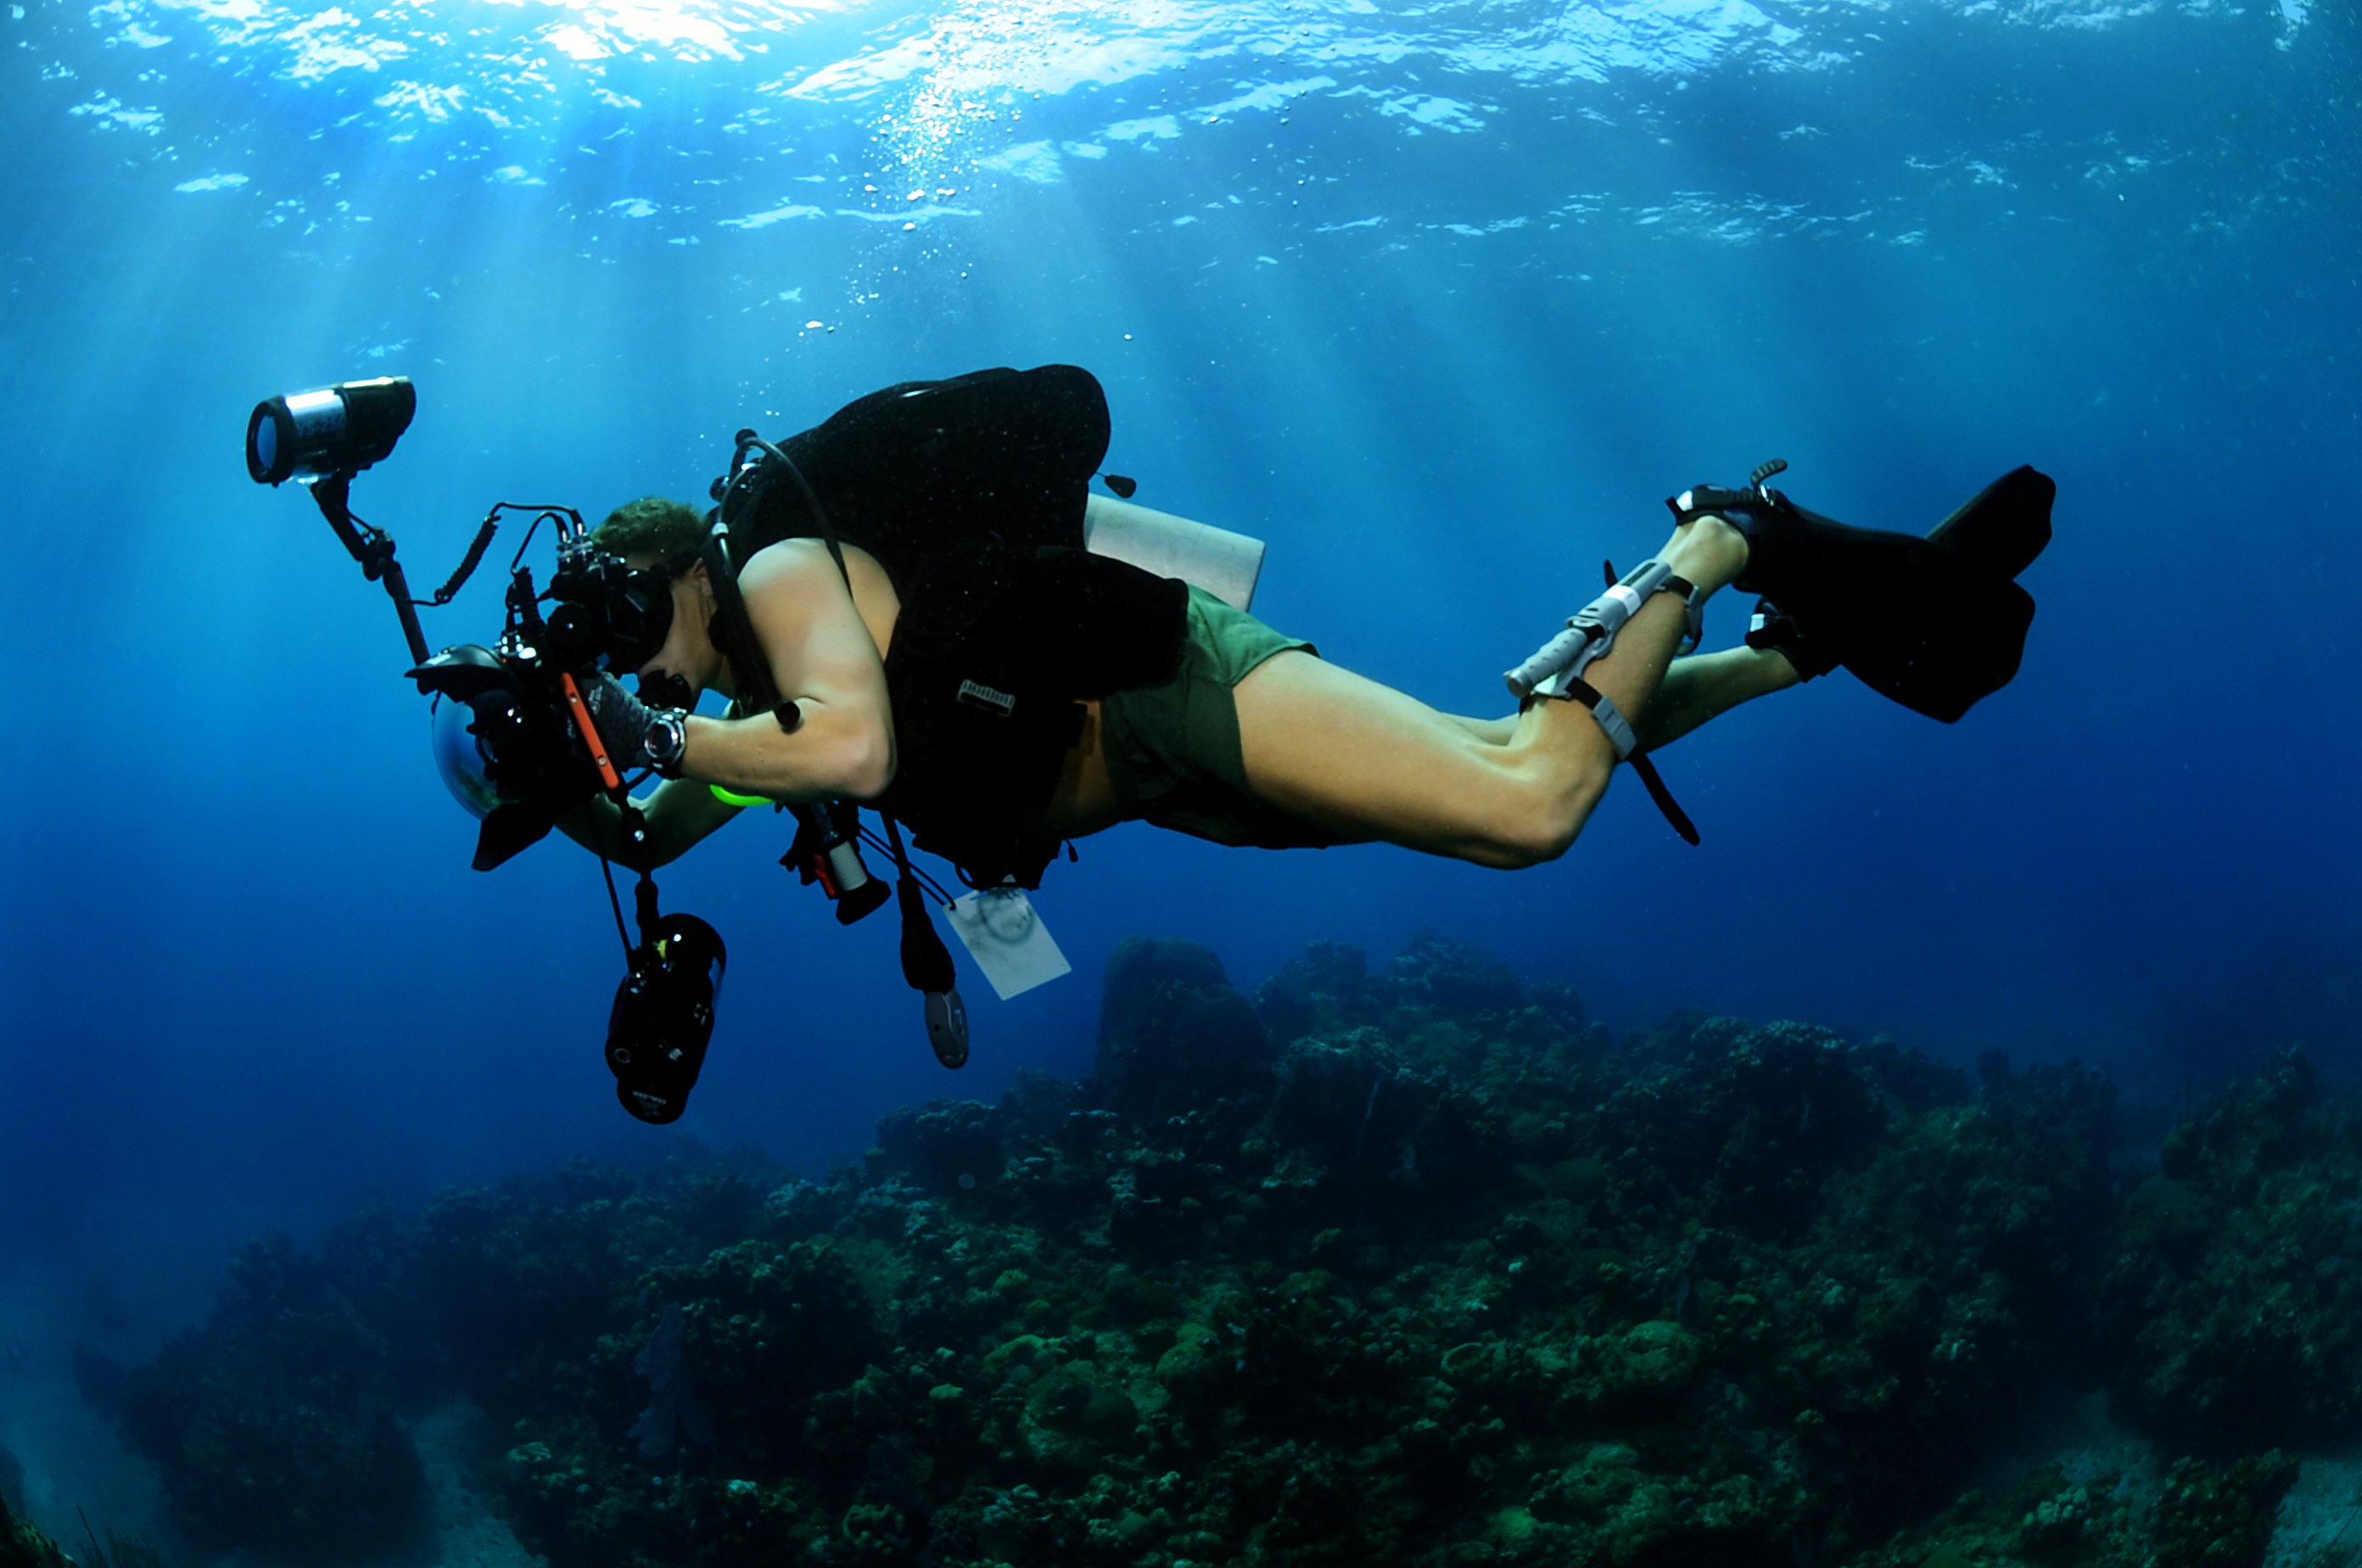 Underwater Photographer, Activity, Blue, Ocean, Photographer, HQ Photo